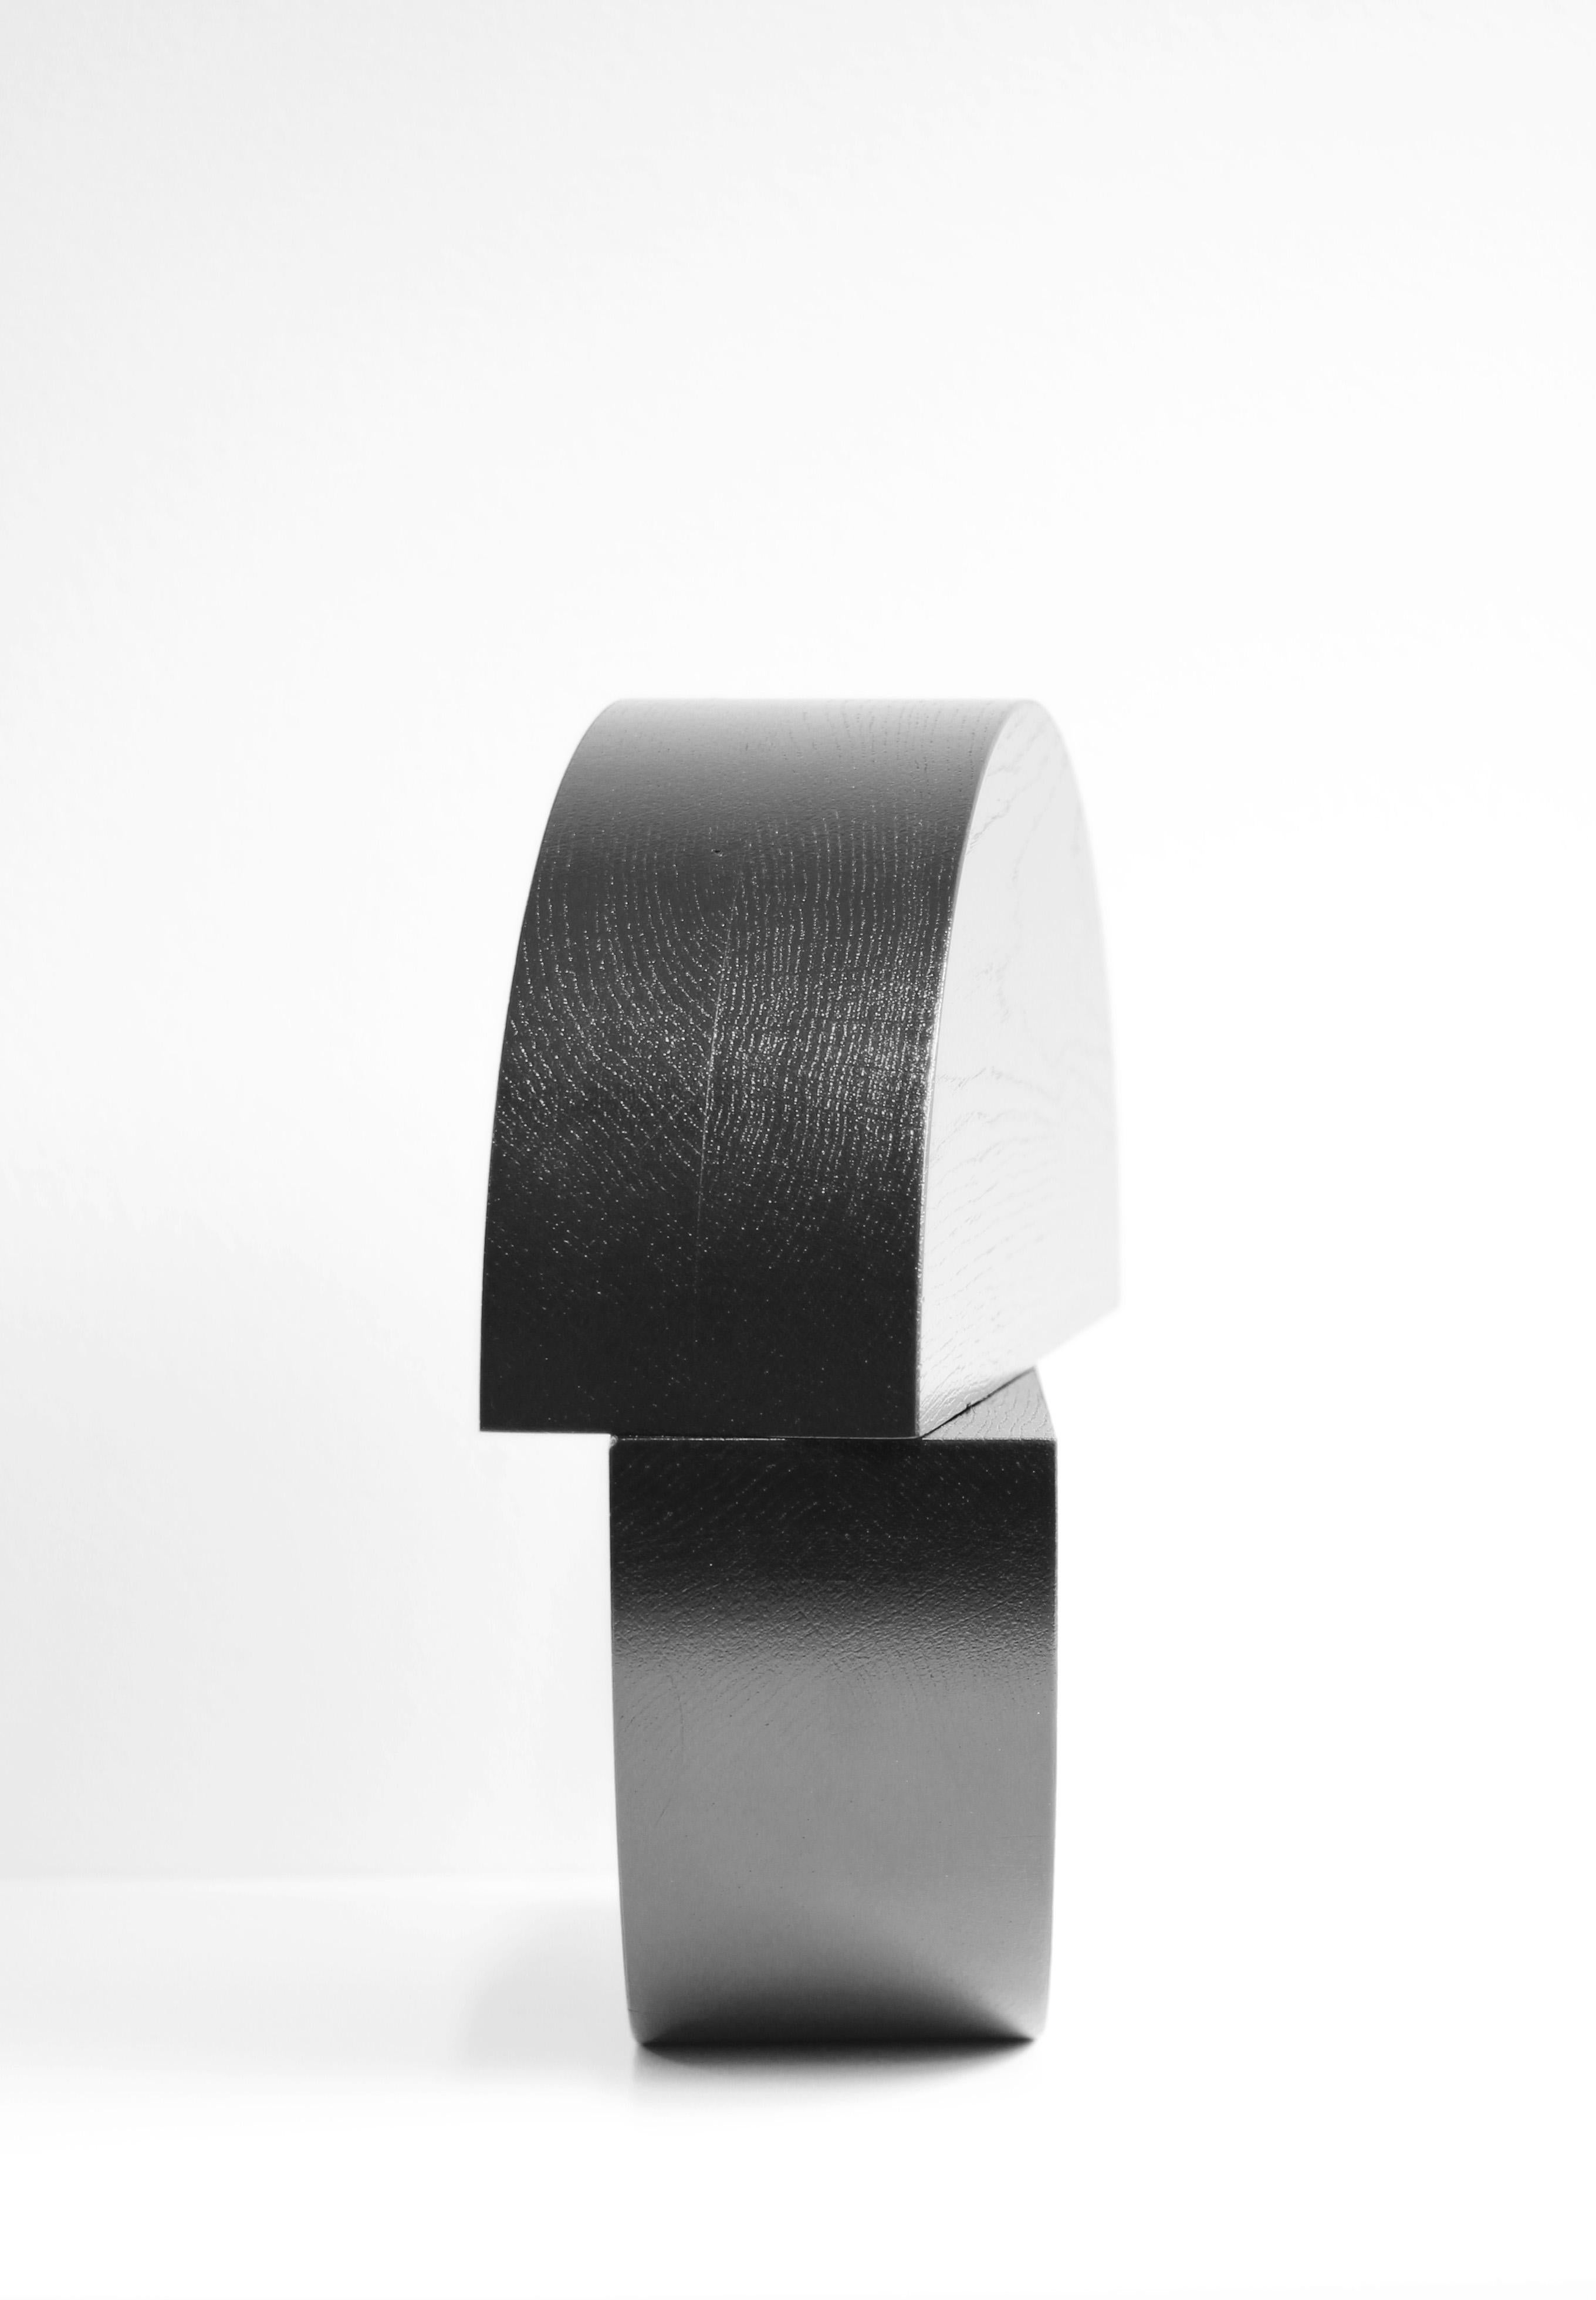 Contemporary Black solid oak table top sculpture, X4 O, by Dutch Studio Verbaan For Sale